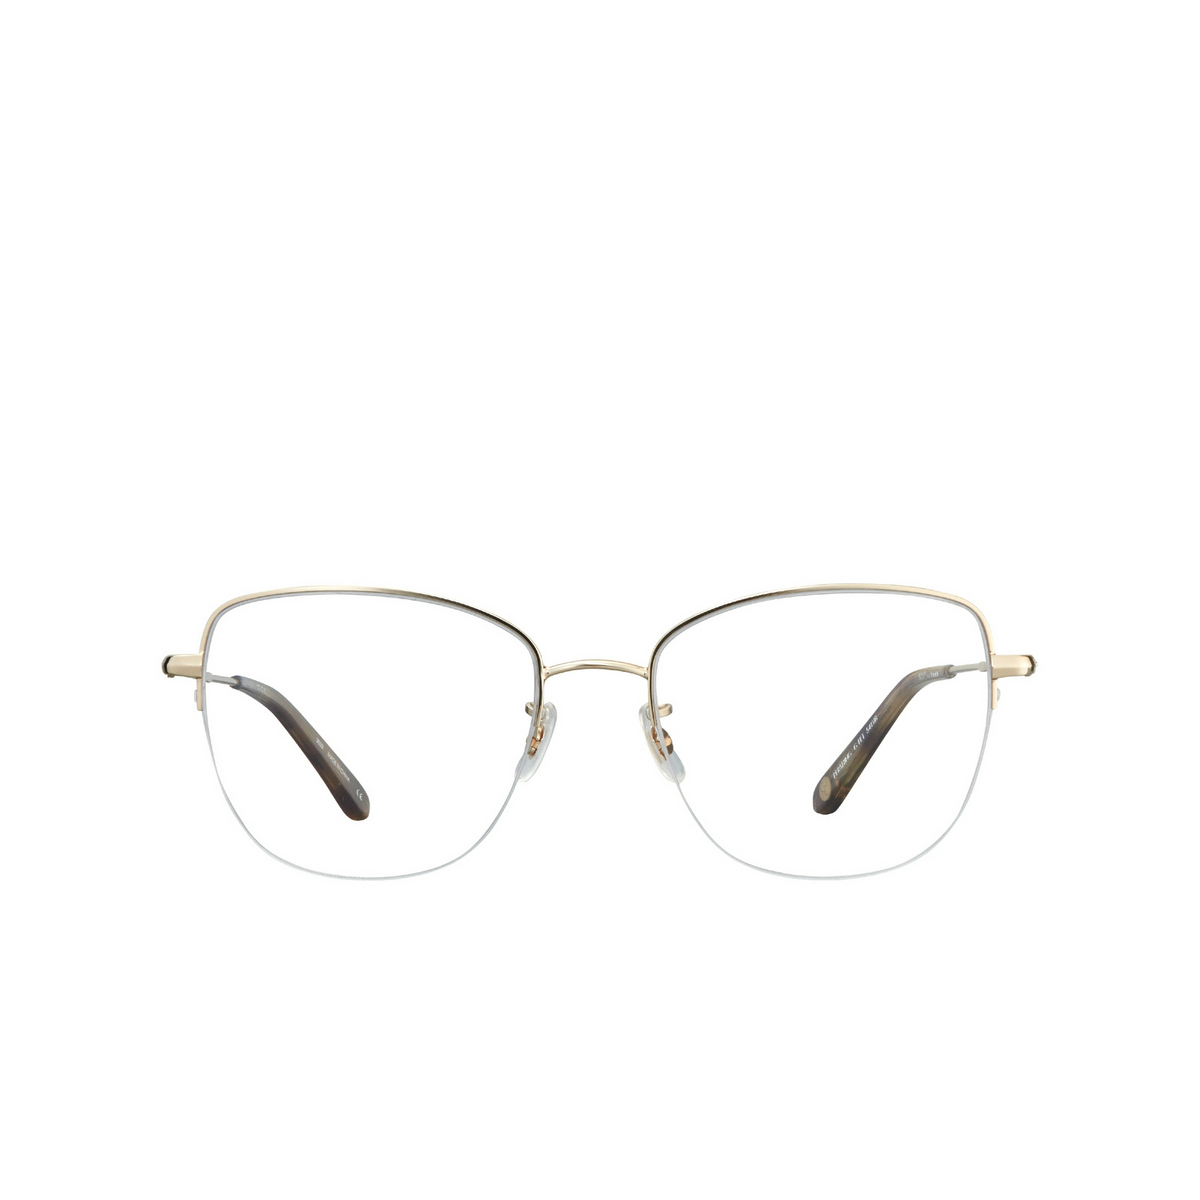 Garrett Leight PERSHING Eyeglasses G-FET Gold-Feather Tortoise - front view